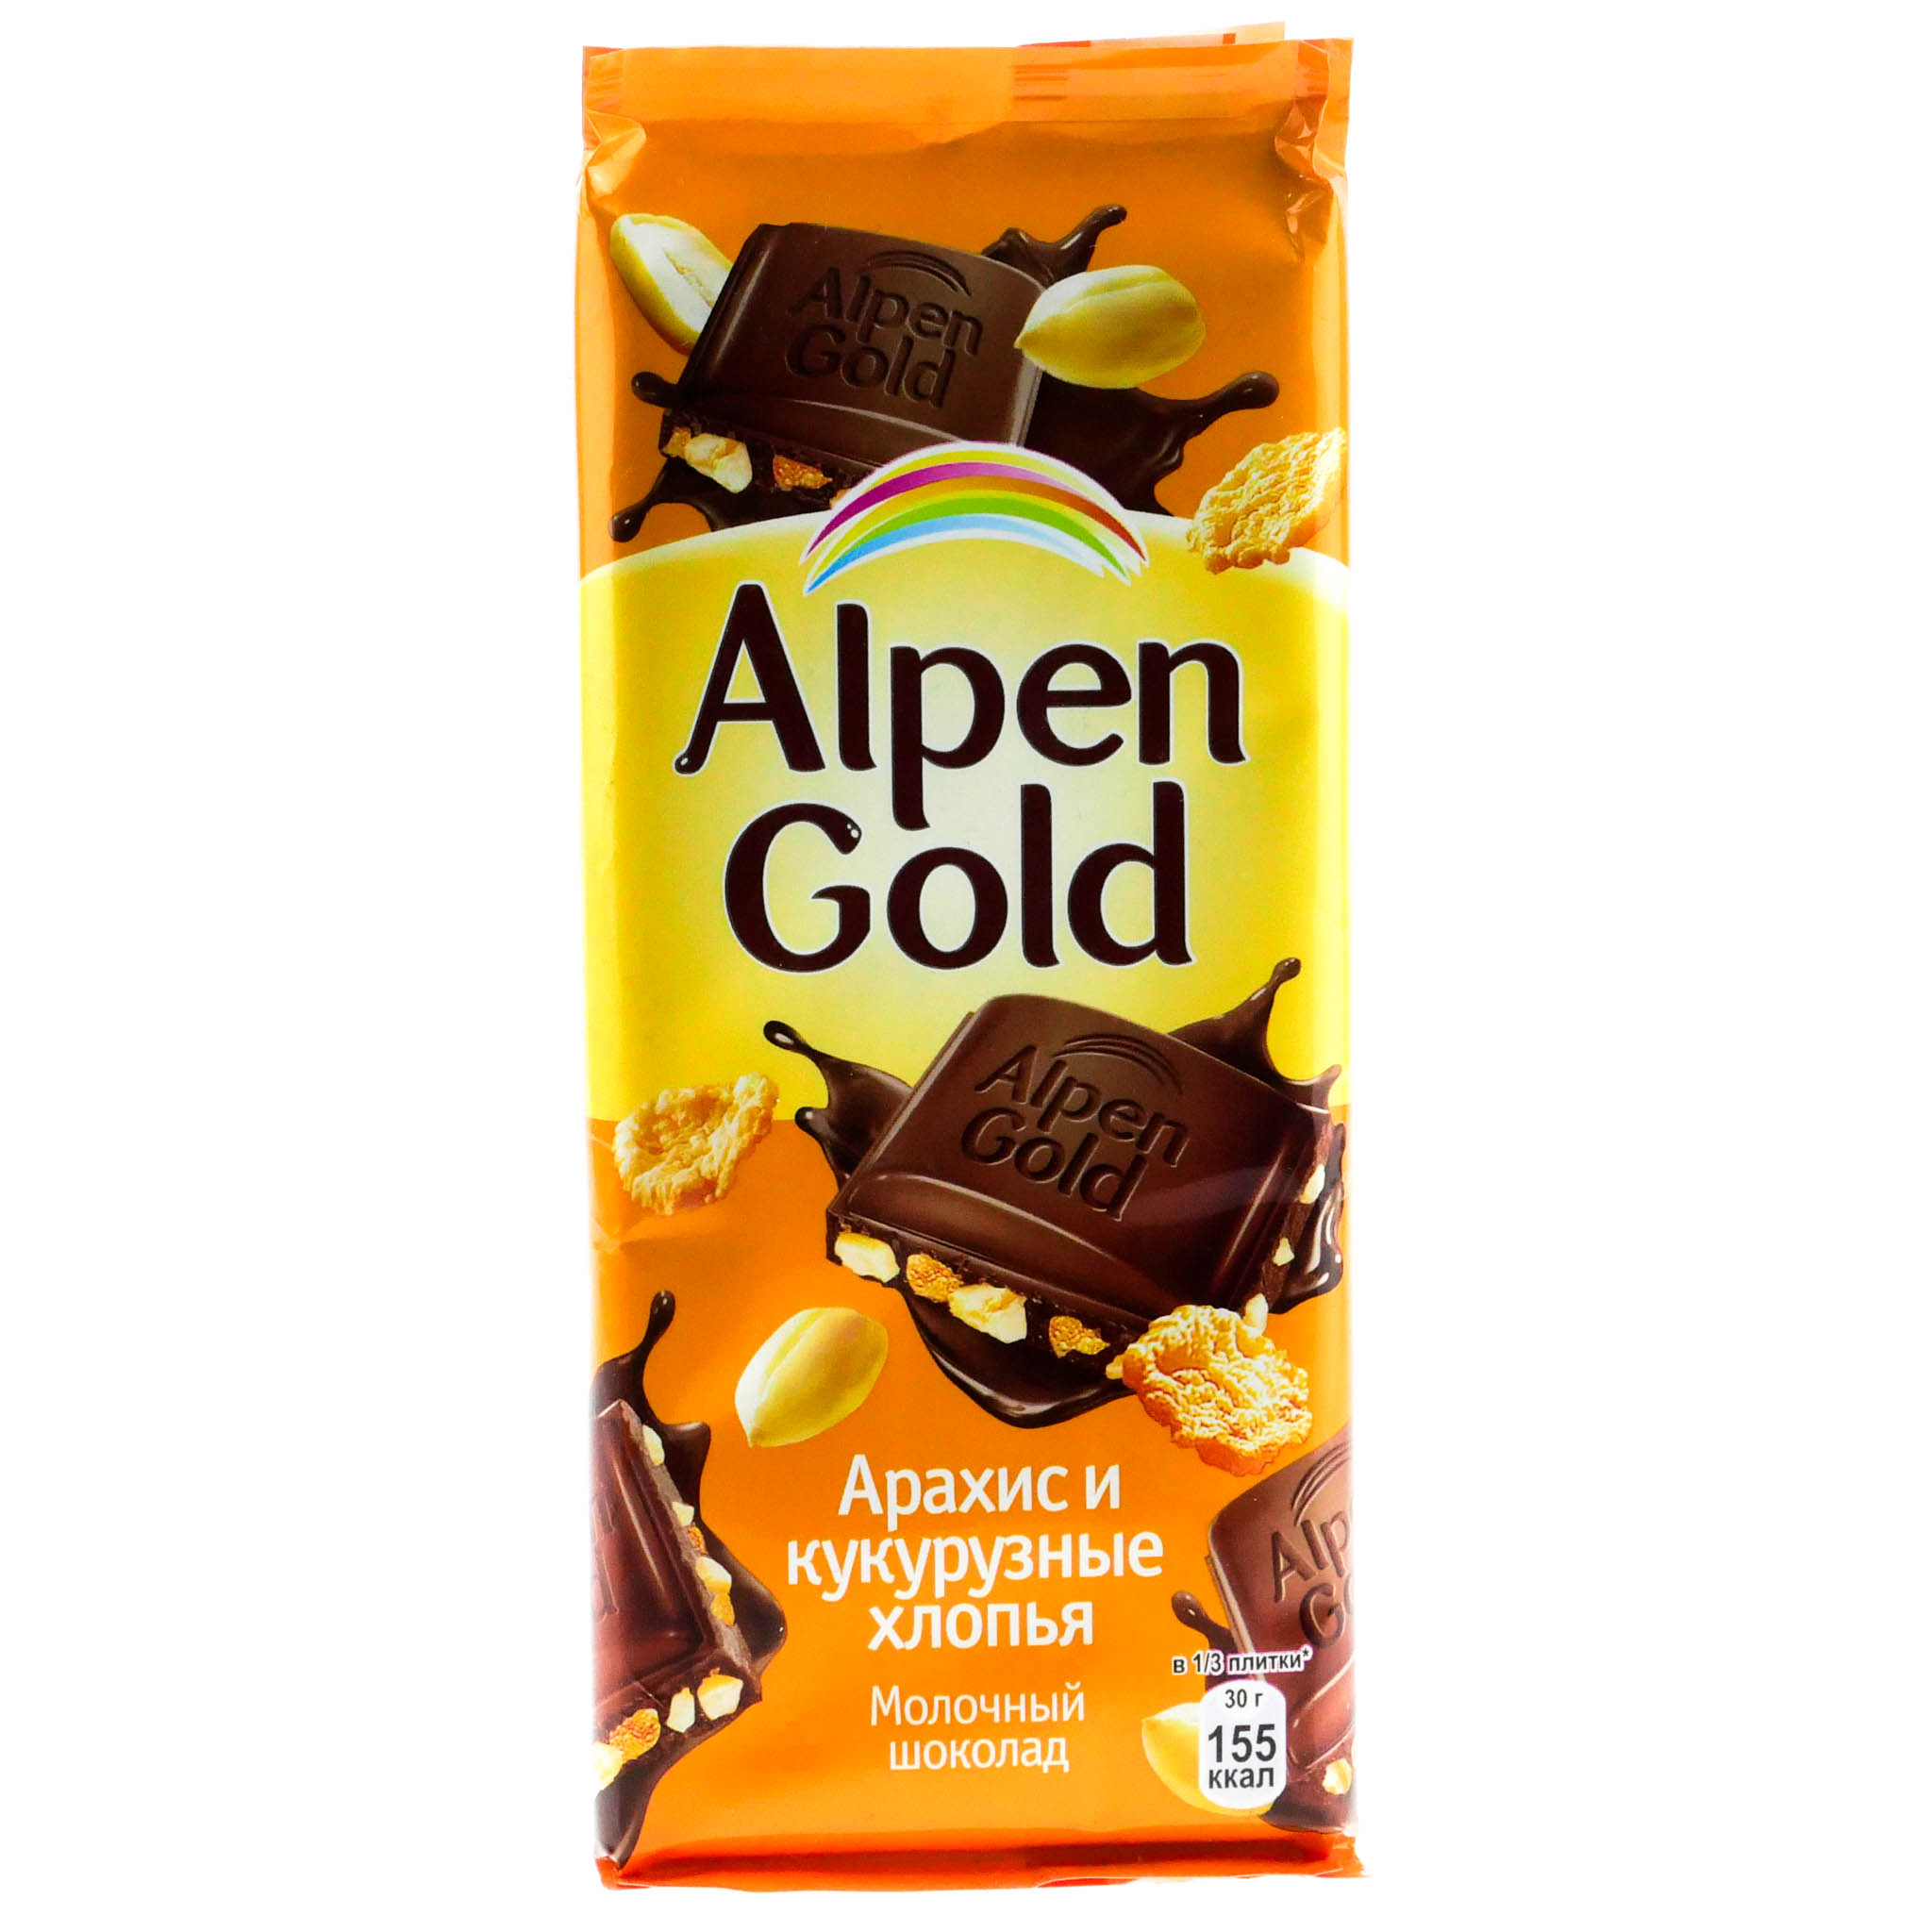 Анпенгольд шоколад. Шоколад Альпен Гольд миндаль карамель 90г. Молочный шоколад альпенголдь. Alpen Gold молочный 90г. Шоколад Альпен Гольд молочный шоколад.